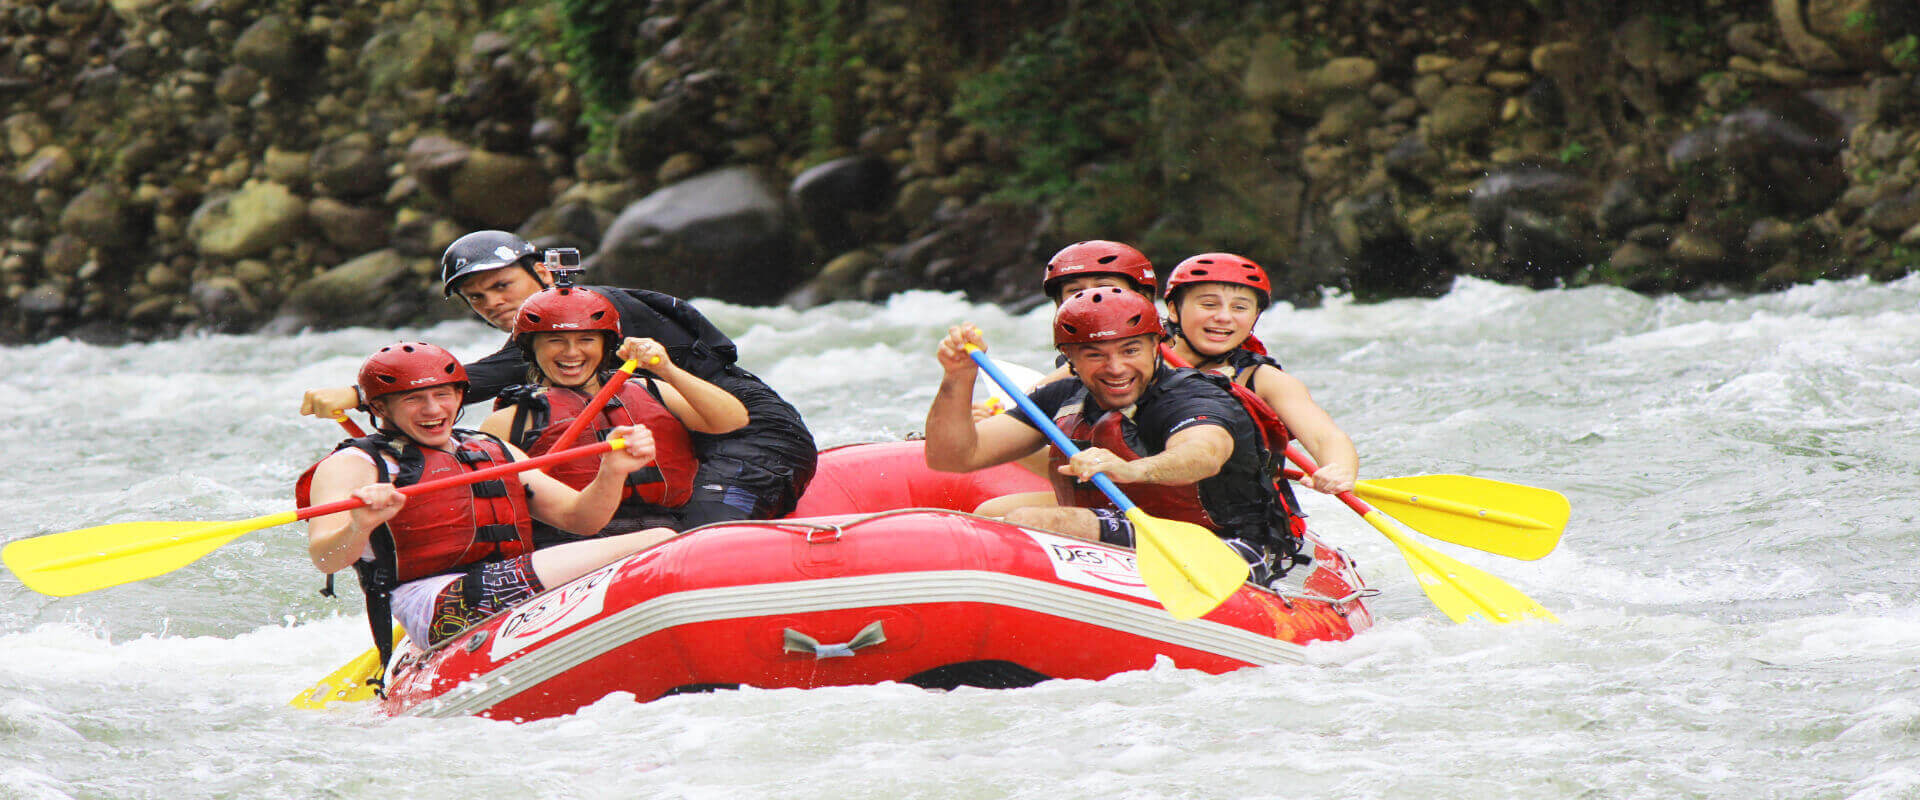 Tenorio River Rafting Class III/IV Tour | Costa Rica Jade Tours